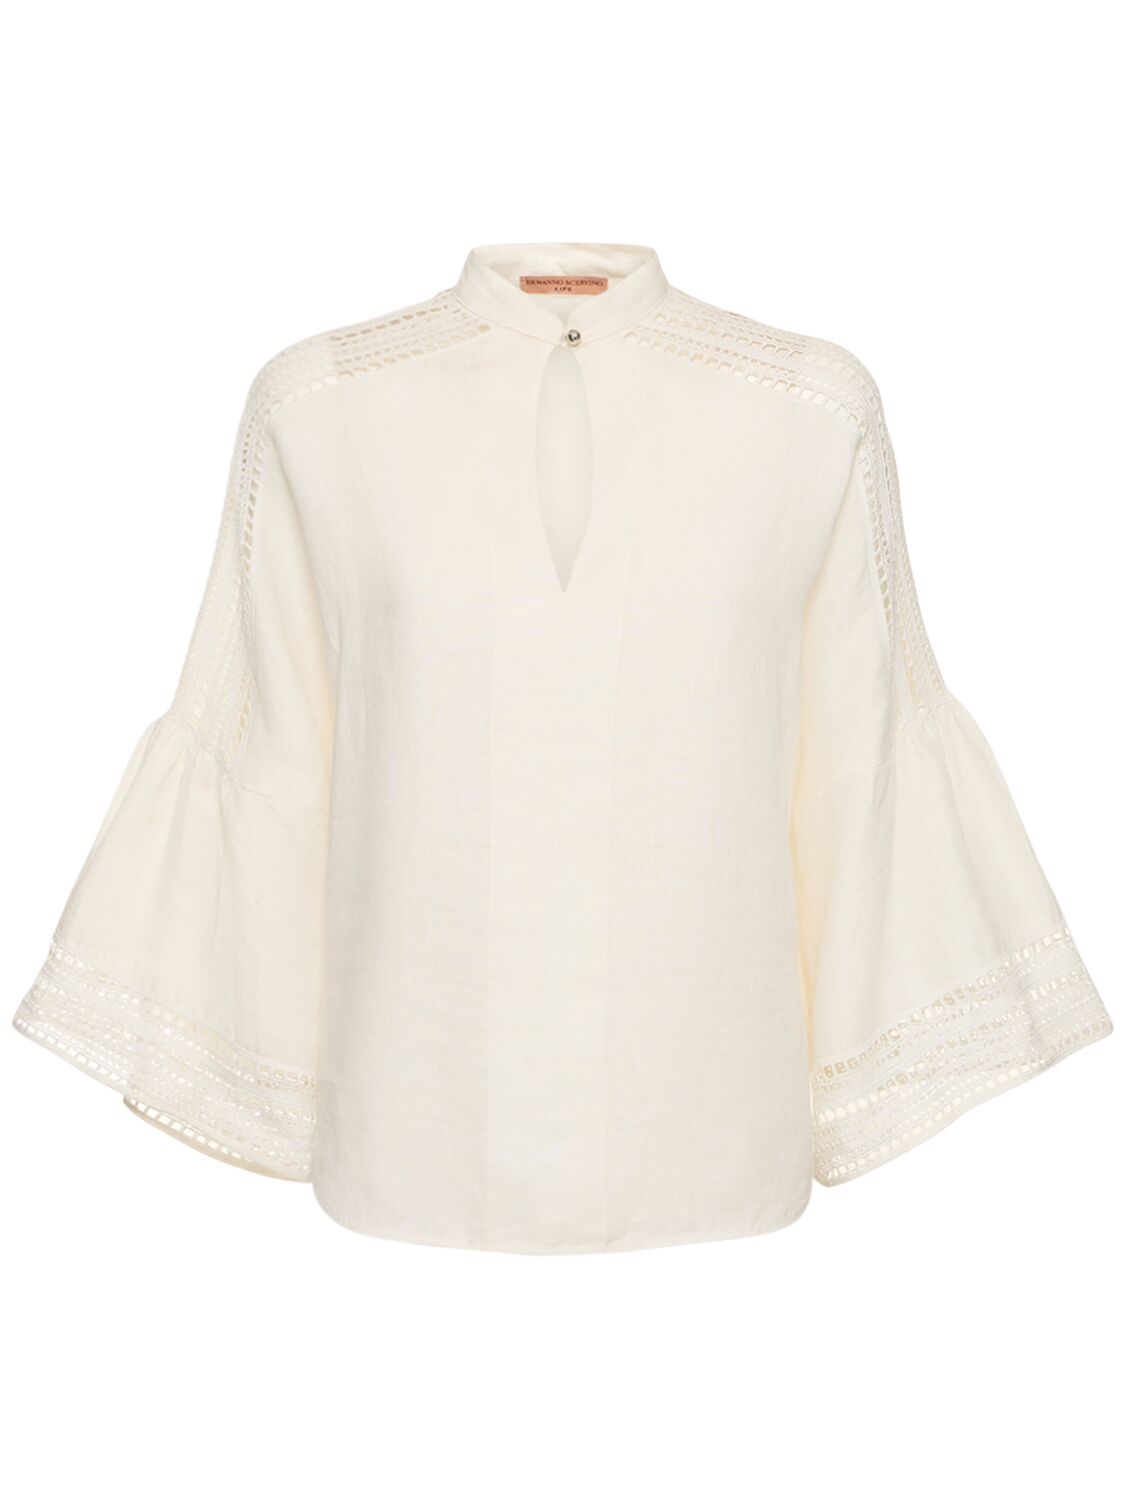 Image of Linen Long Sleeve Blouse Shirt